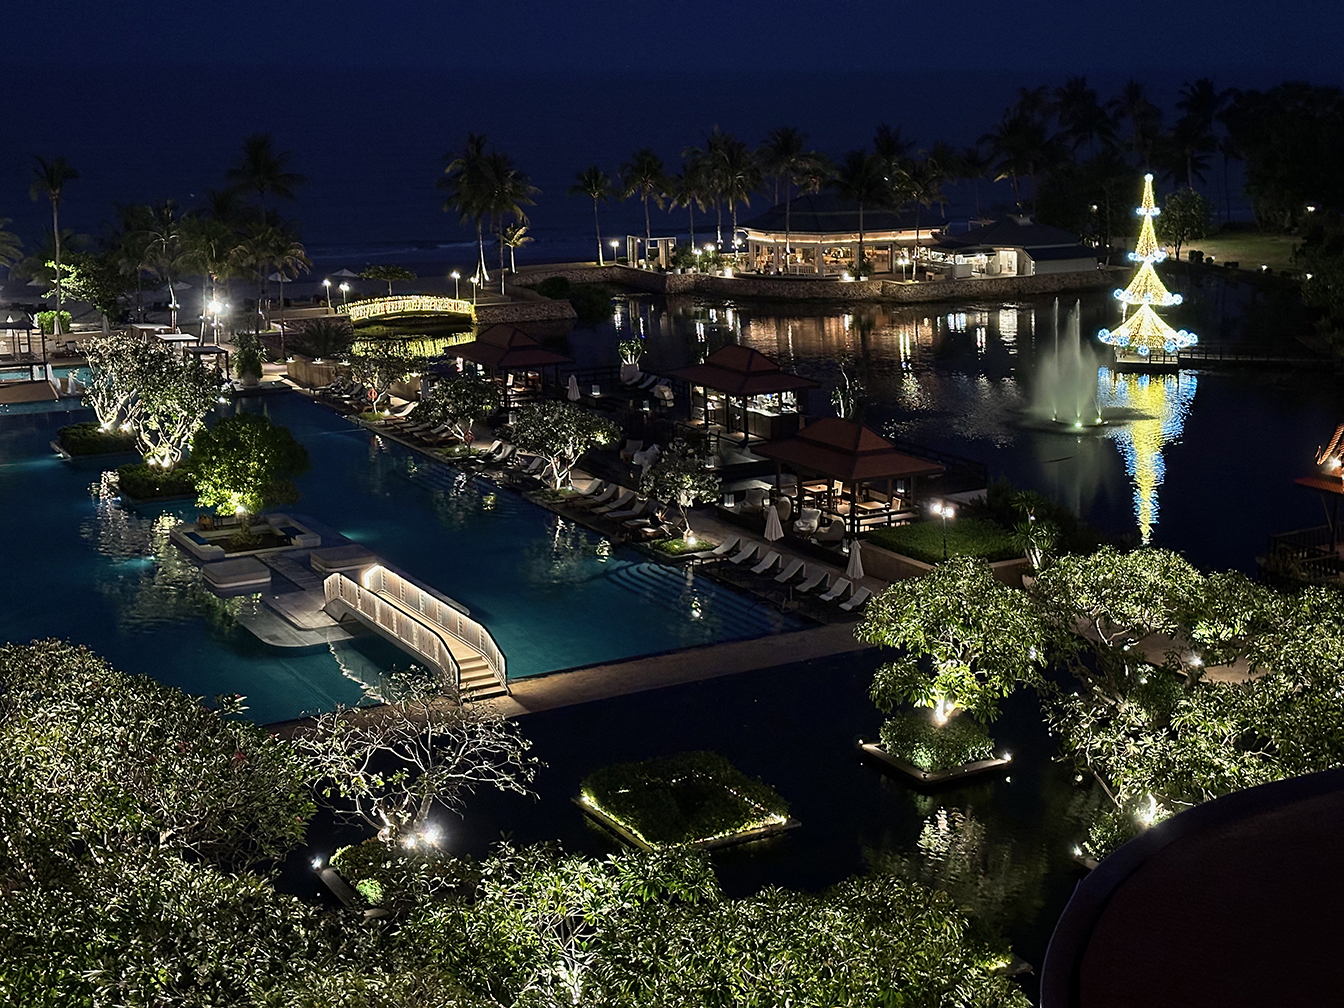 Dusit Thani Resort at Night